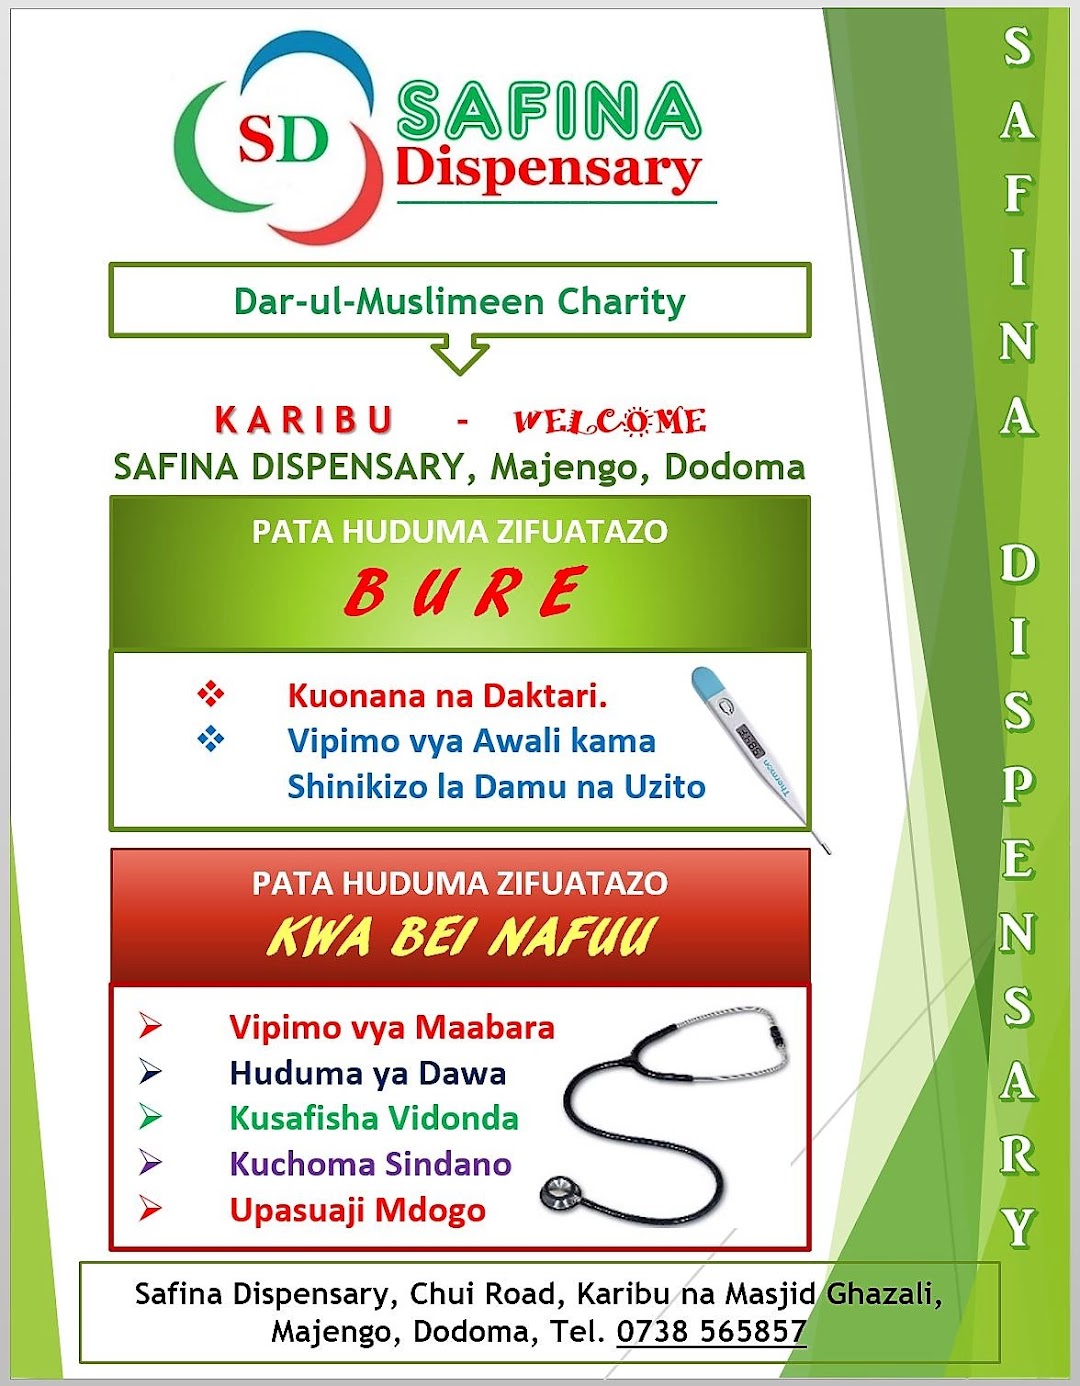 Safina Dispensary